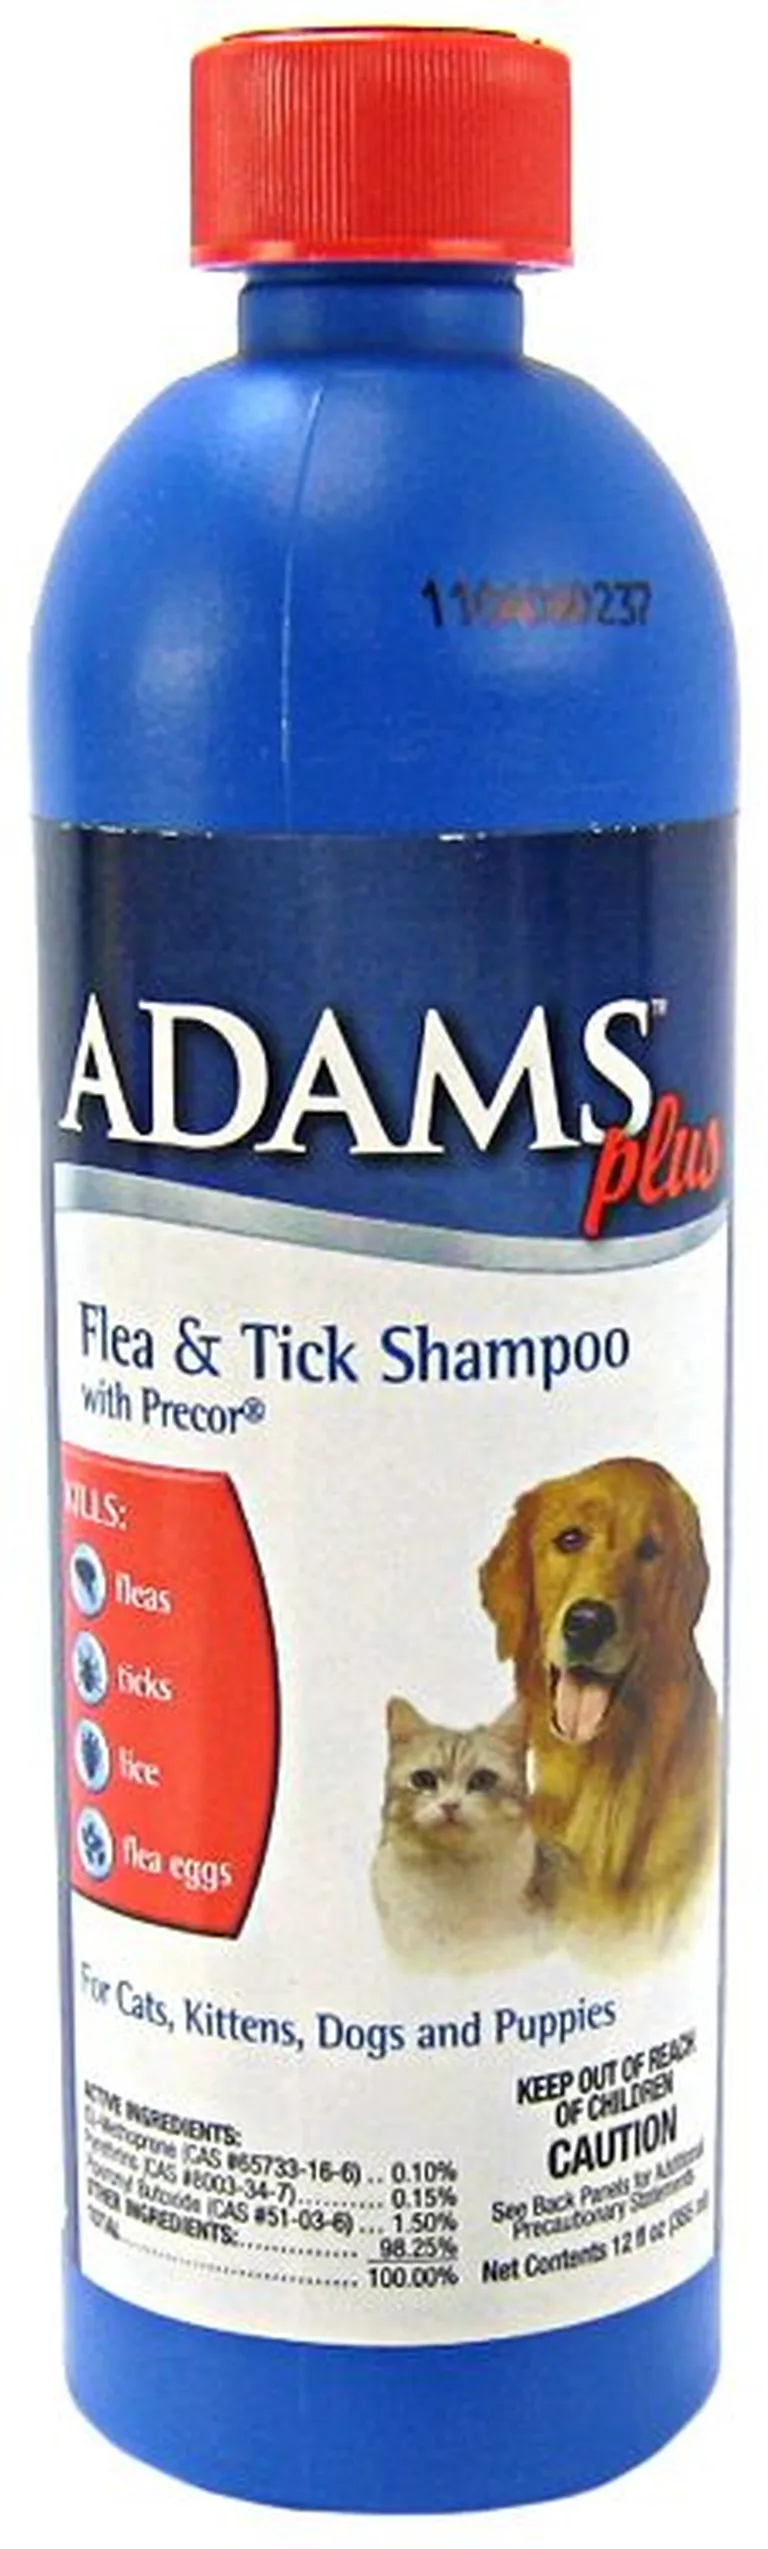 Adams Plus Flea and Tick Shampoo with Precor Photo 2